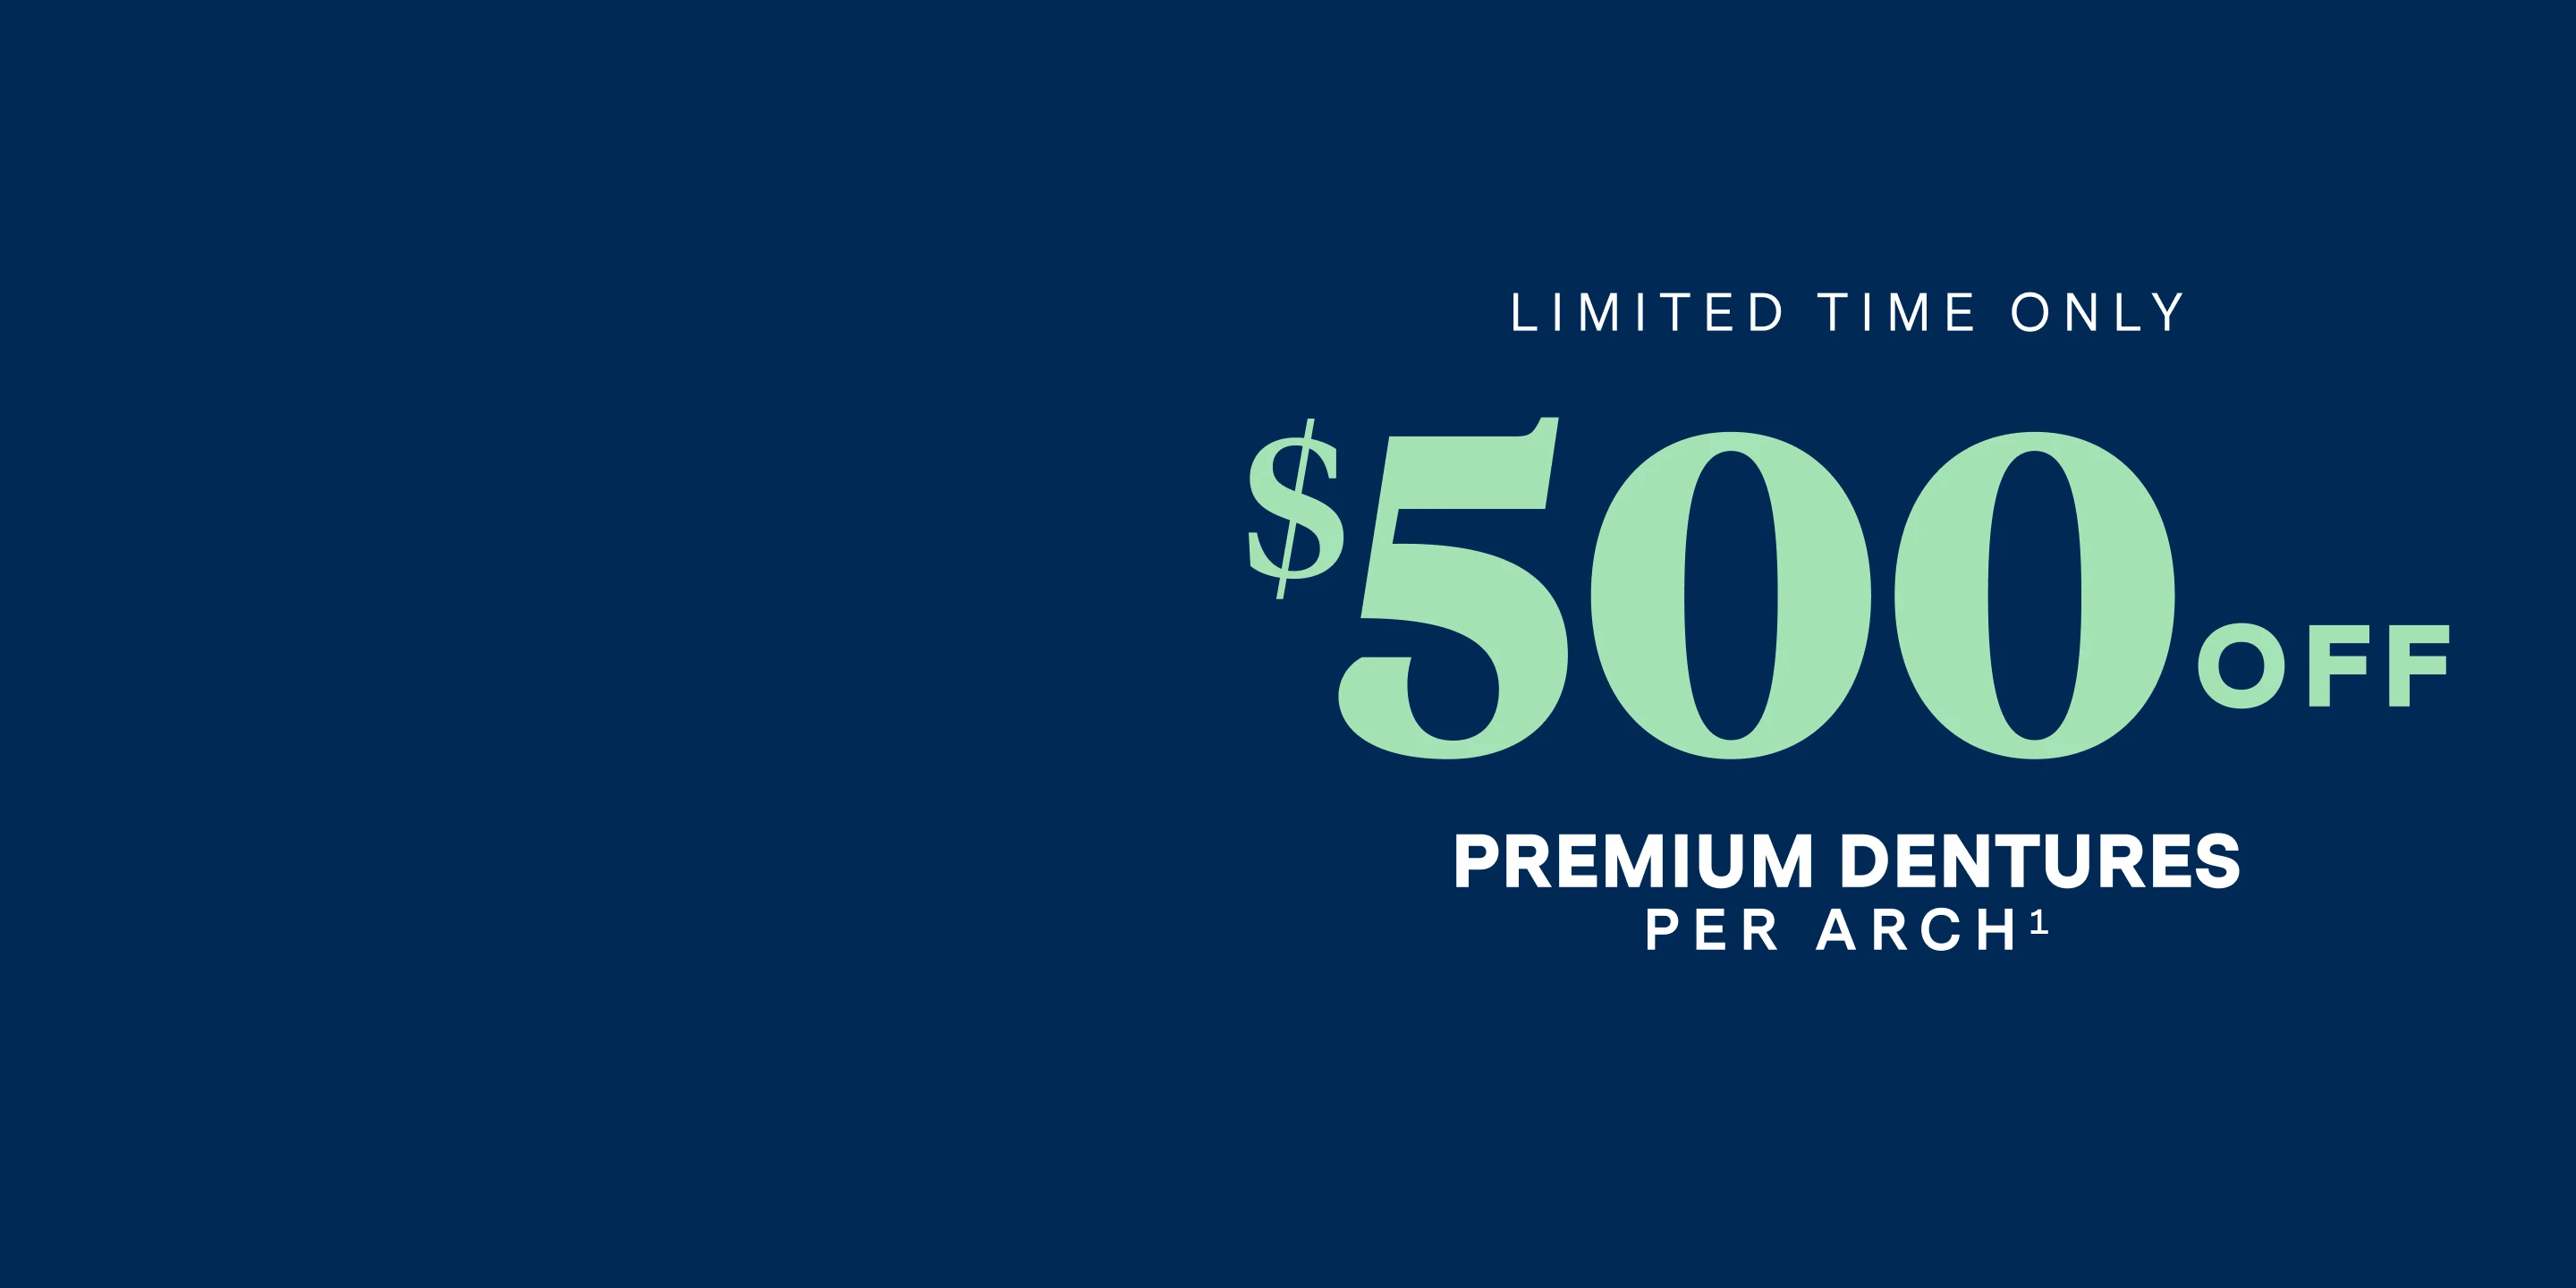 Affordable Dentures at Aspen Dental for a Limited time only. $500 off Premium Dentures per arch. 